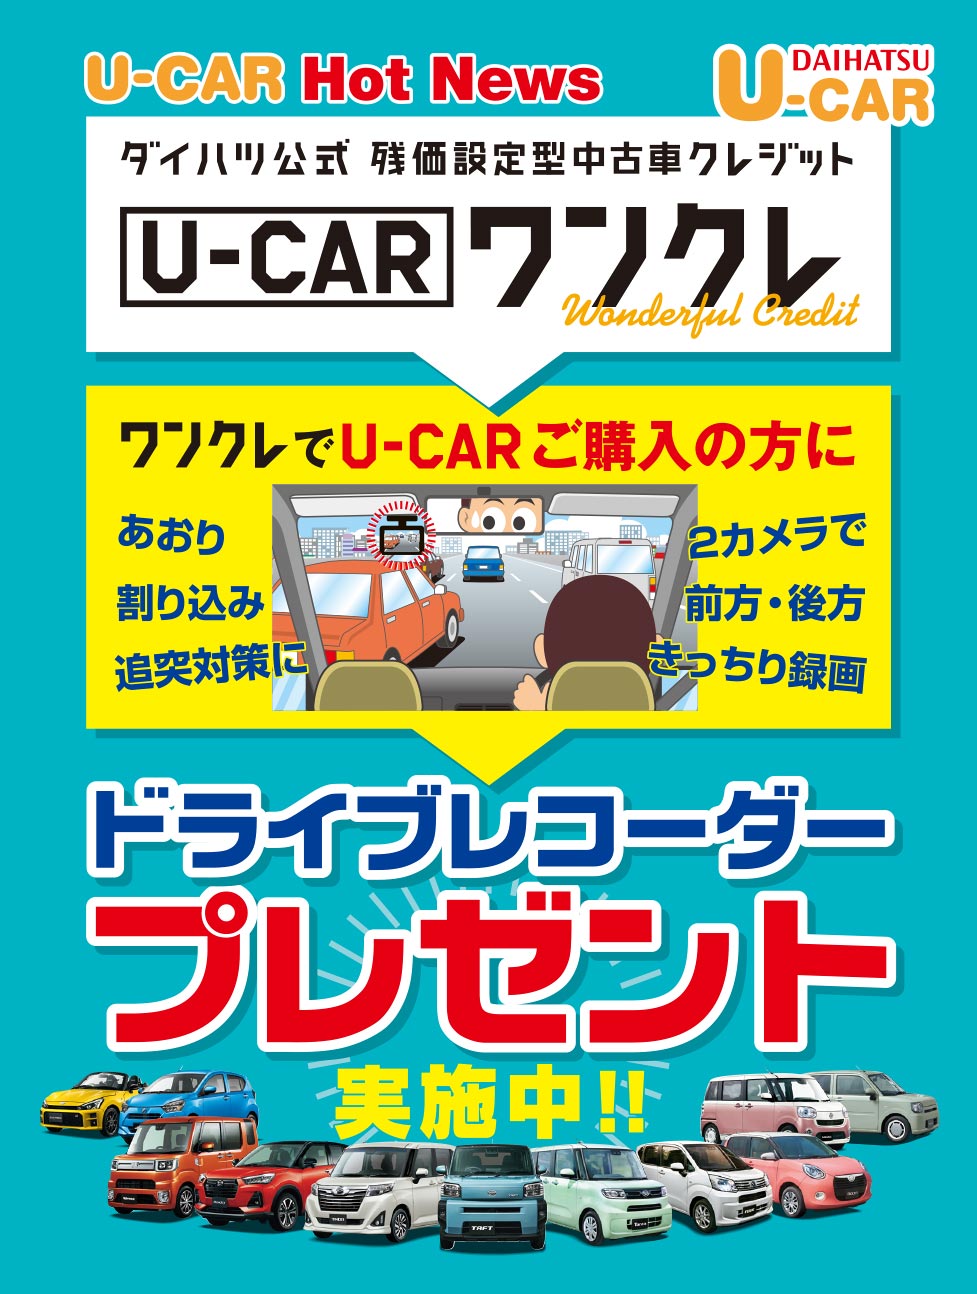 U Car 中古車にチャンス ご成約時ワンクレ利用でもれなくドラレコプレゼント 大阪ダイハツ販売株式会社